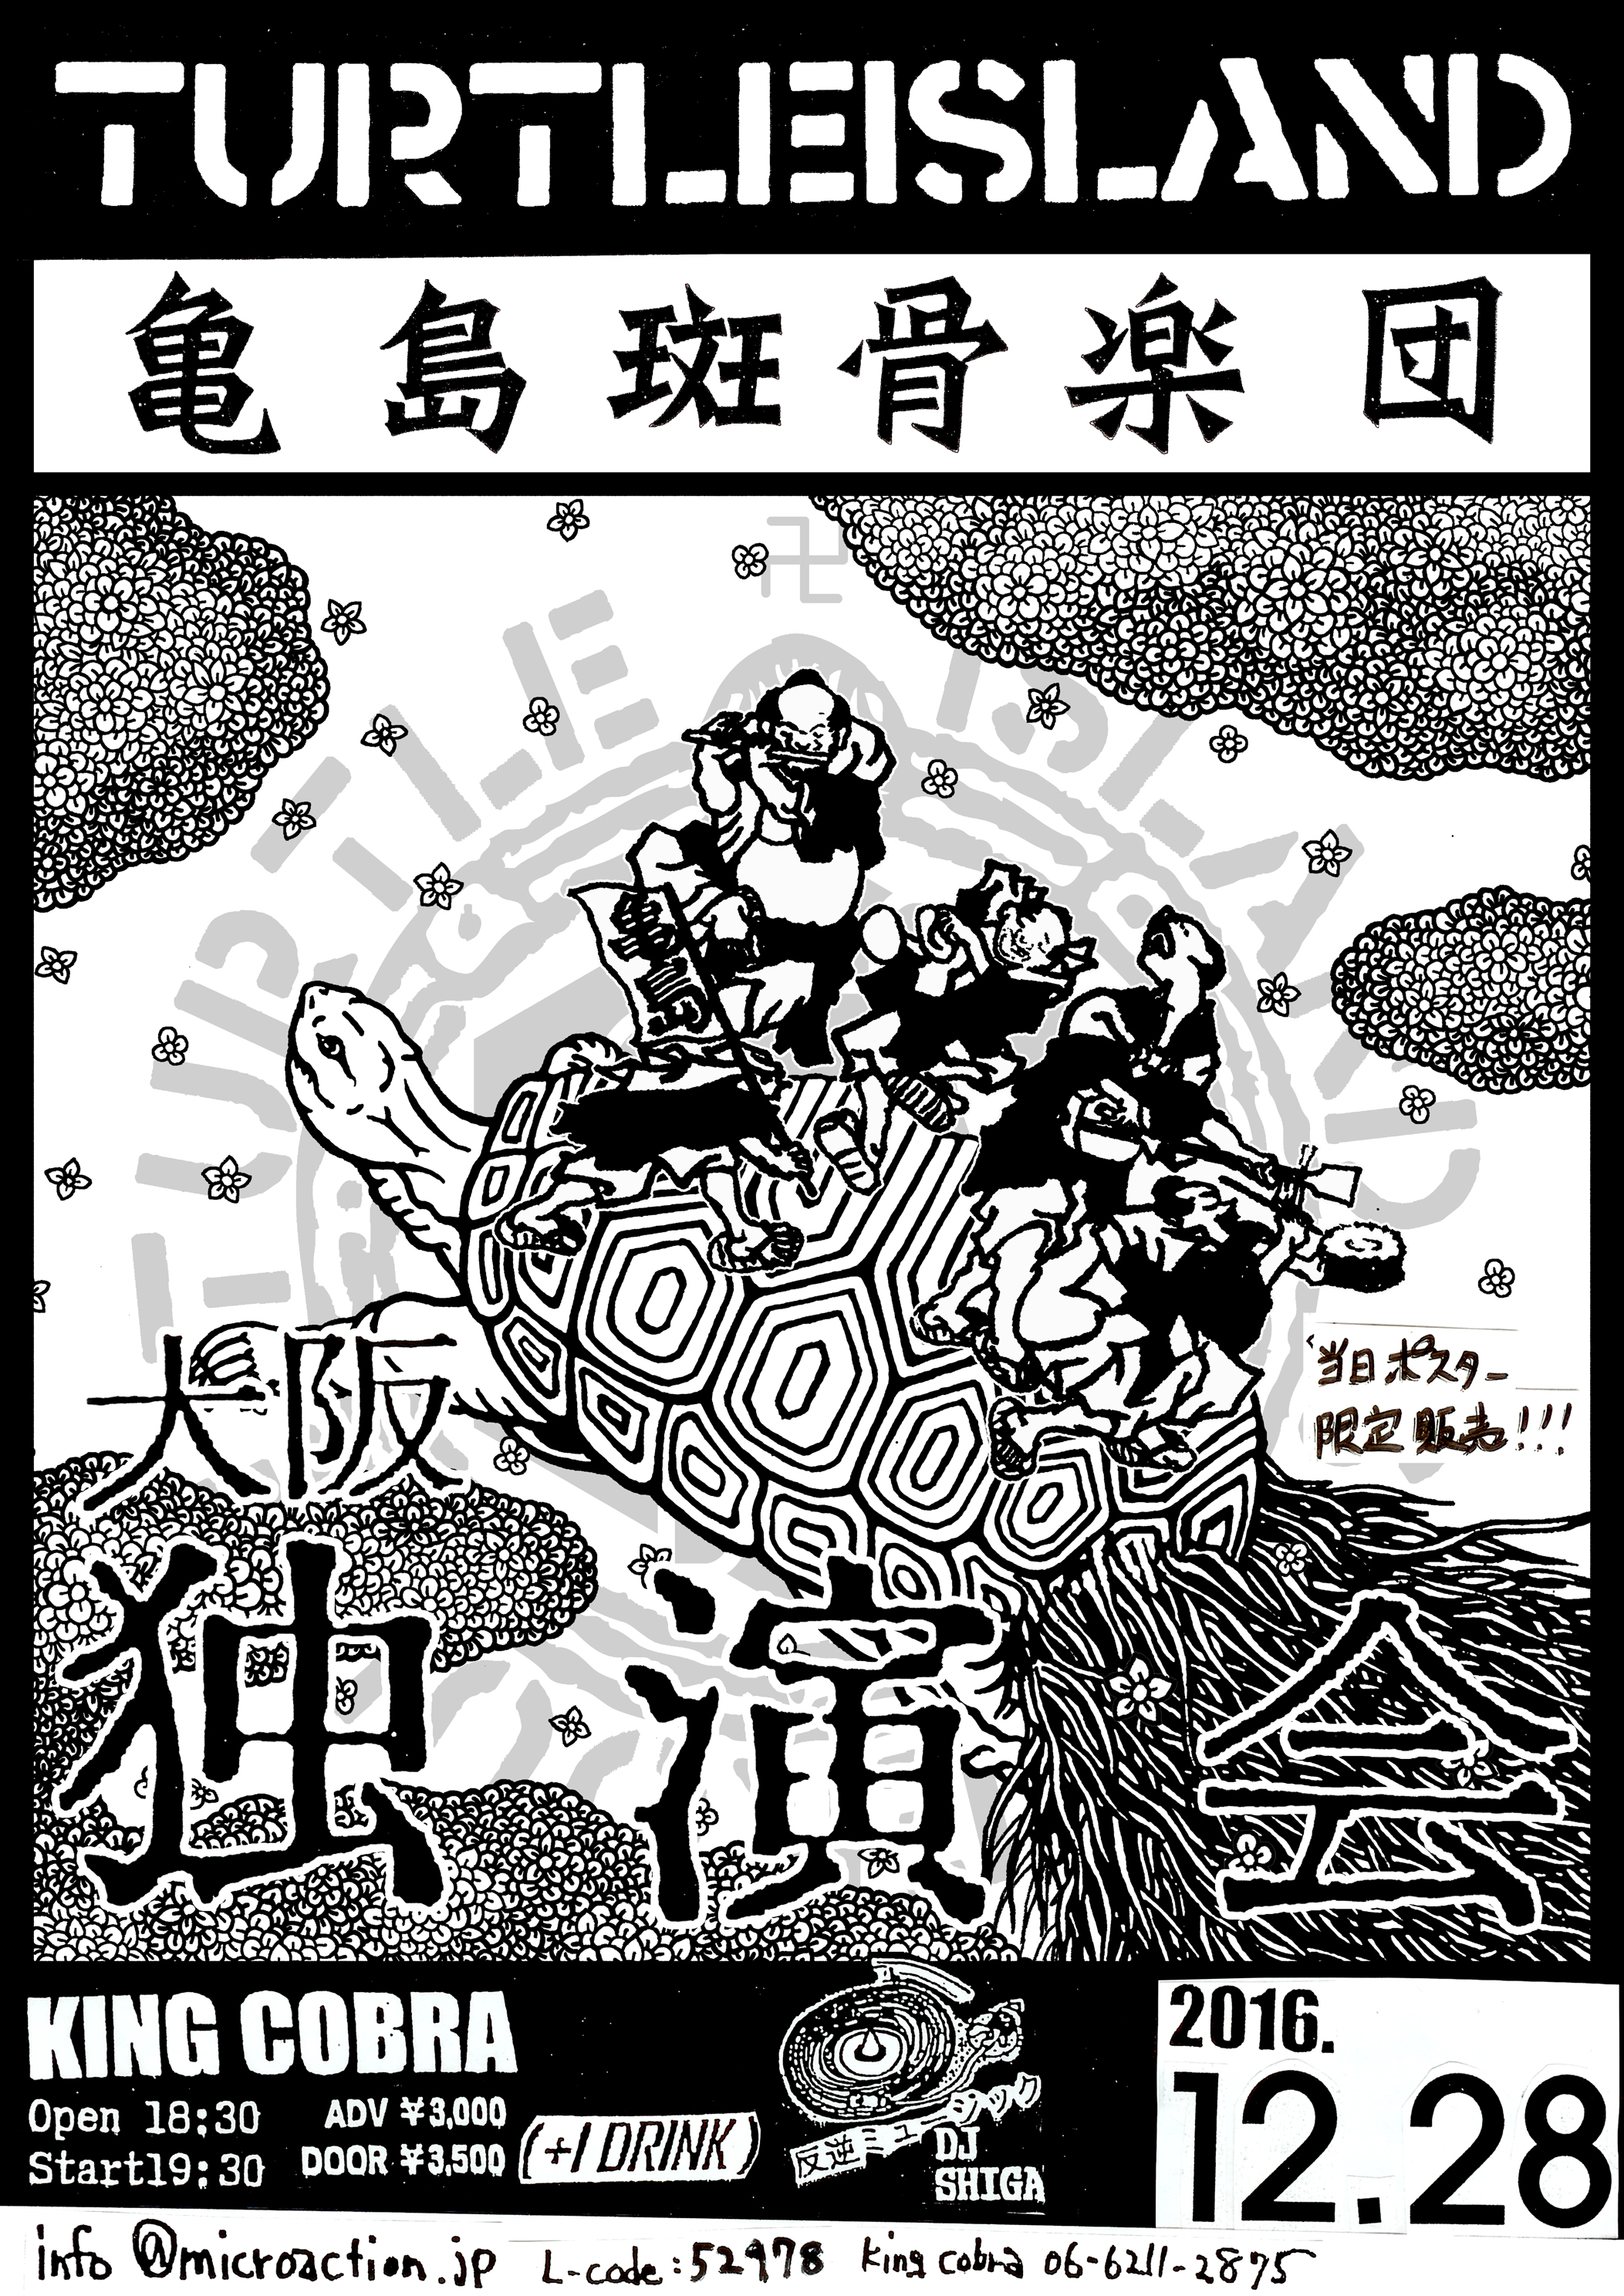 2016年12月28日(水) Shiga-Chang presents TURTLE ISLAND 大阪独演会 @ 大阪 KINGCOBRA  『 TURTLEISLAND 大阪独演会 弐』